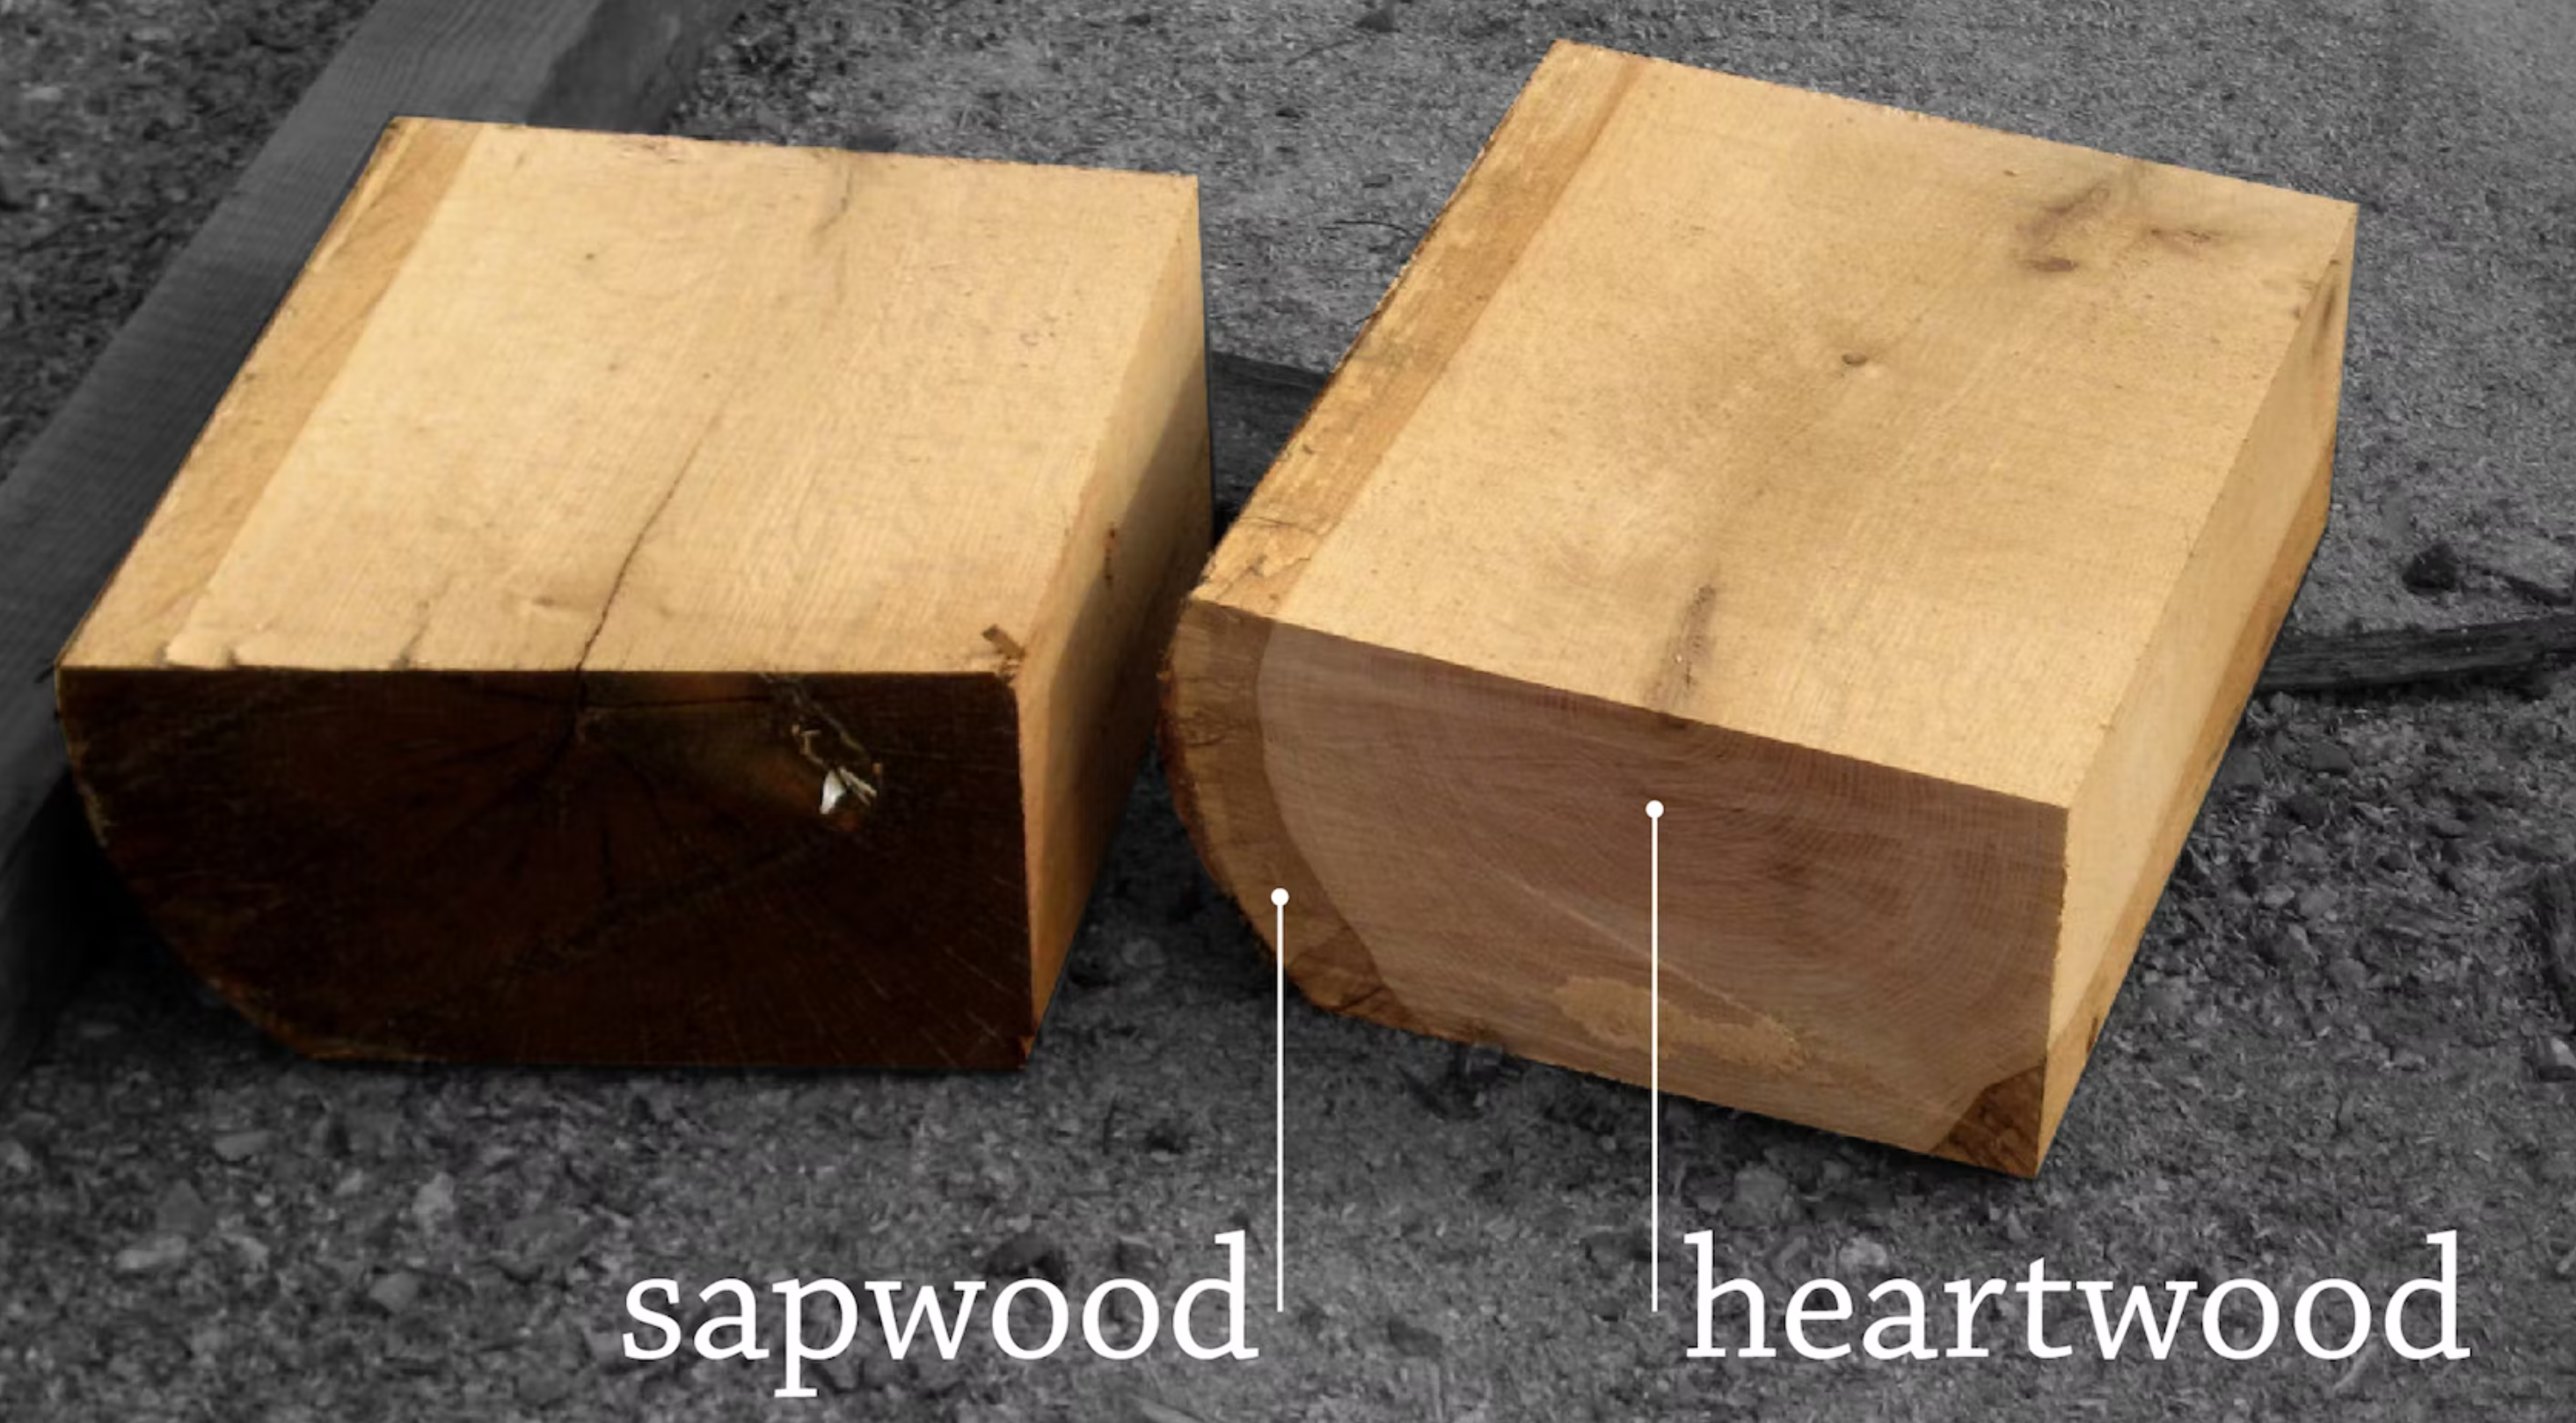 Sapwood and Heartwood